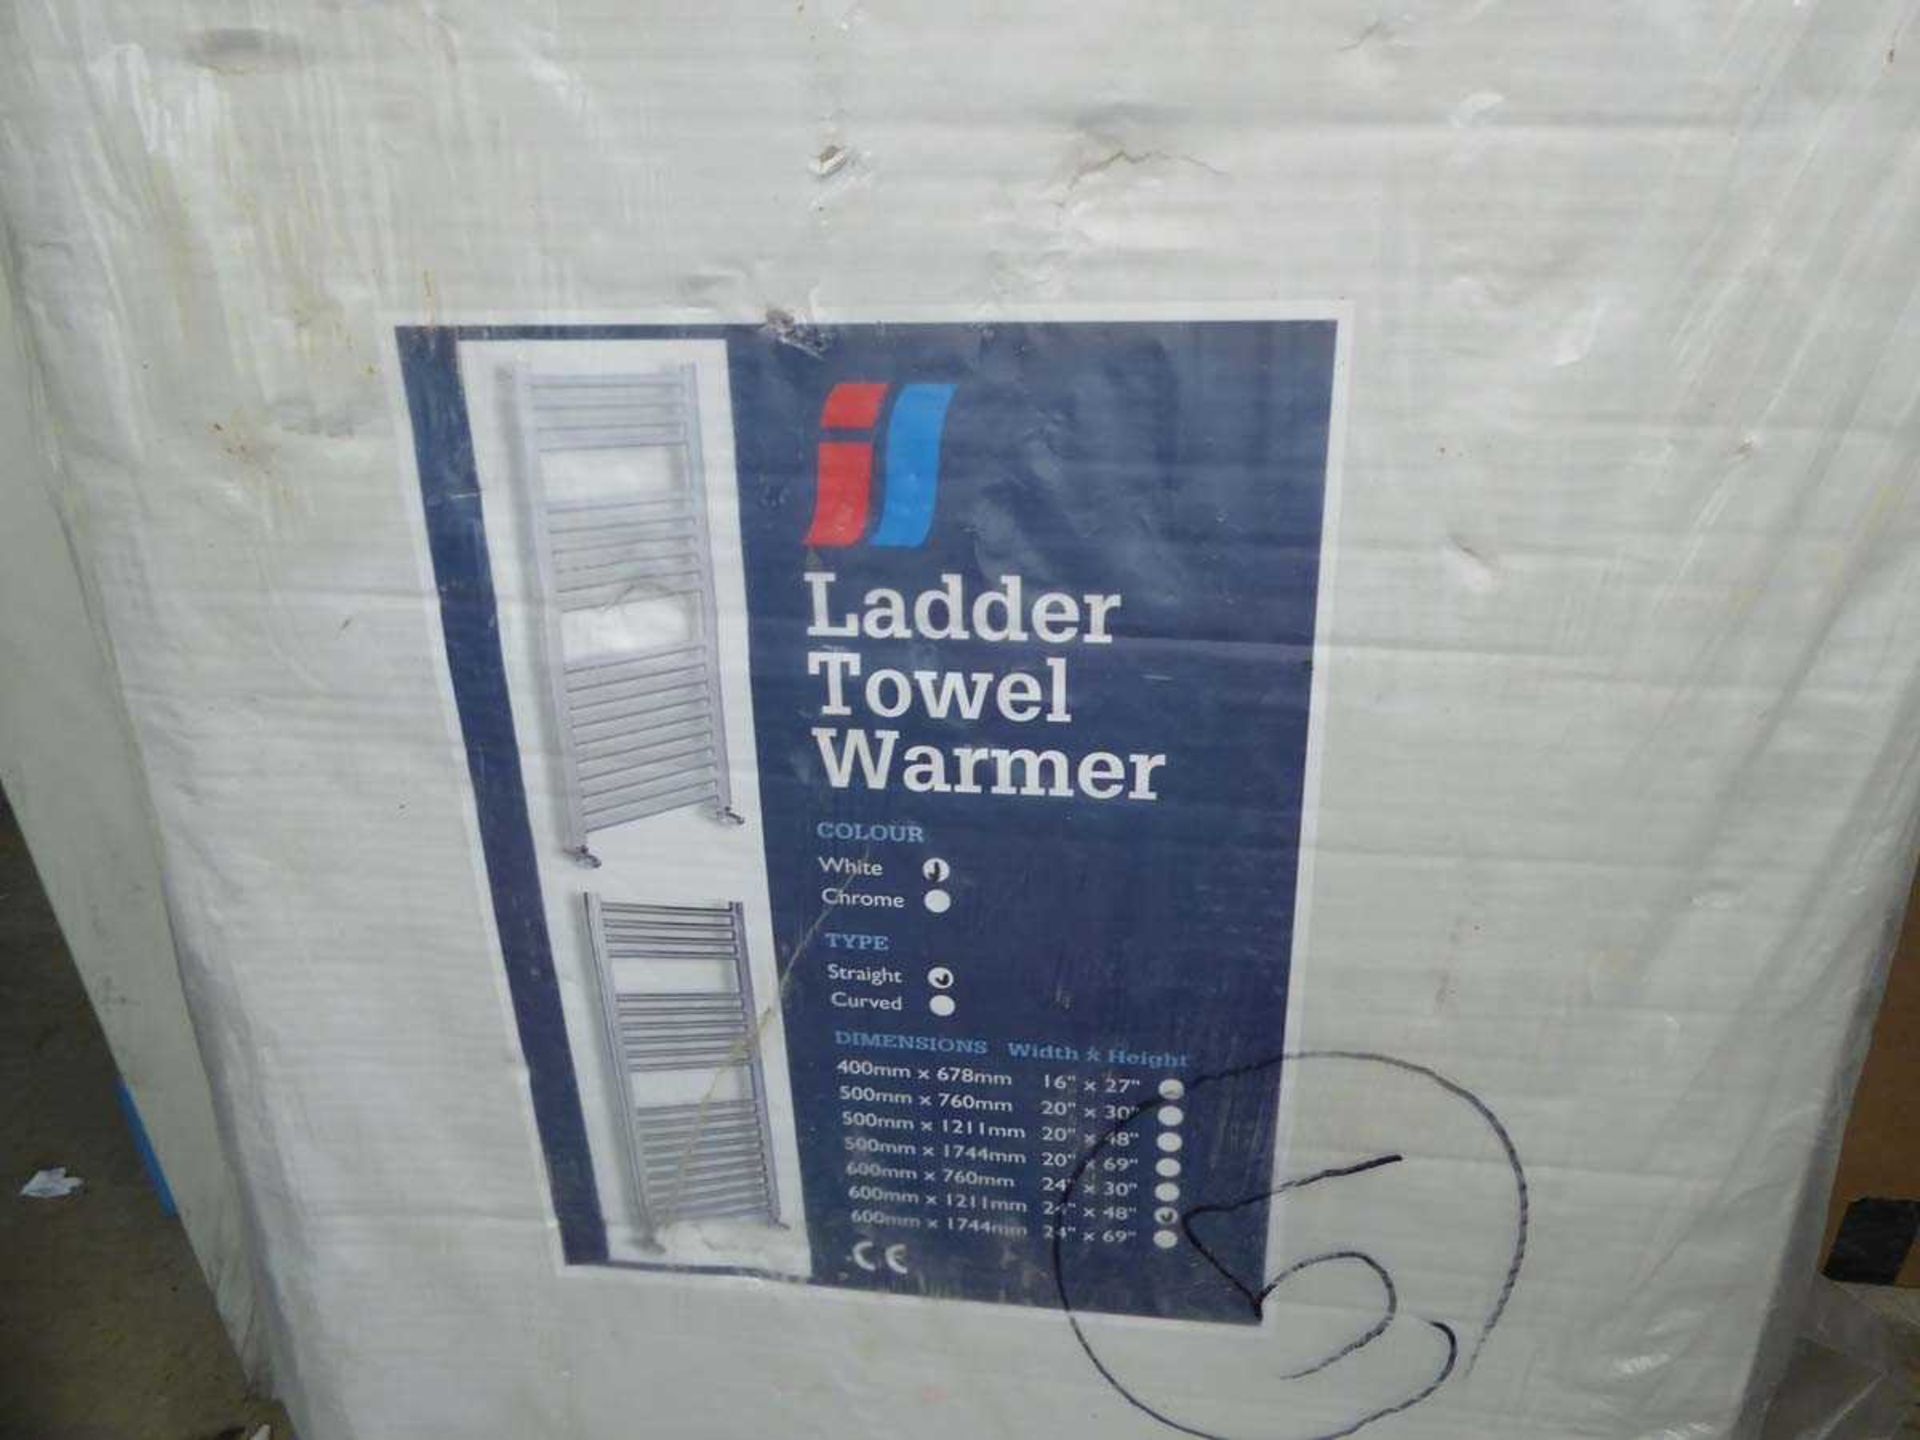 600 x 1211mm ladder towel warmer - Image 2 of 2